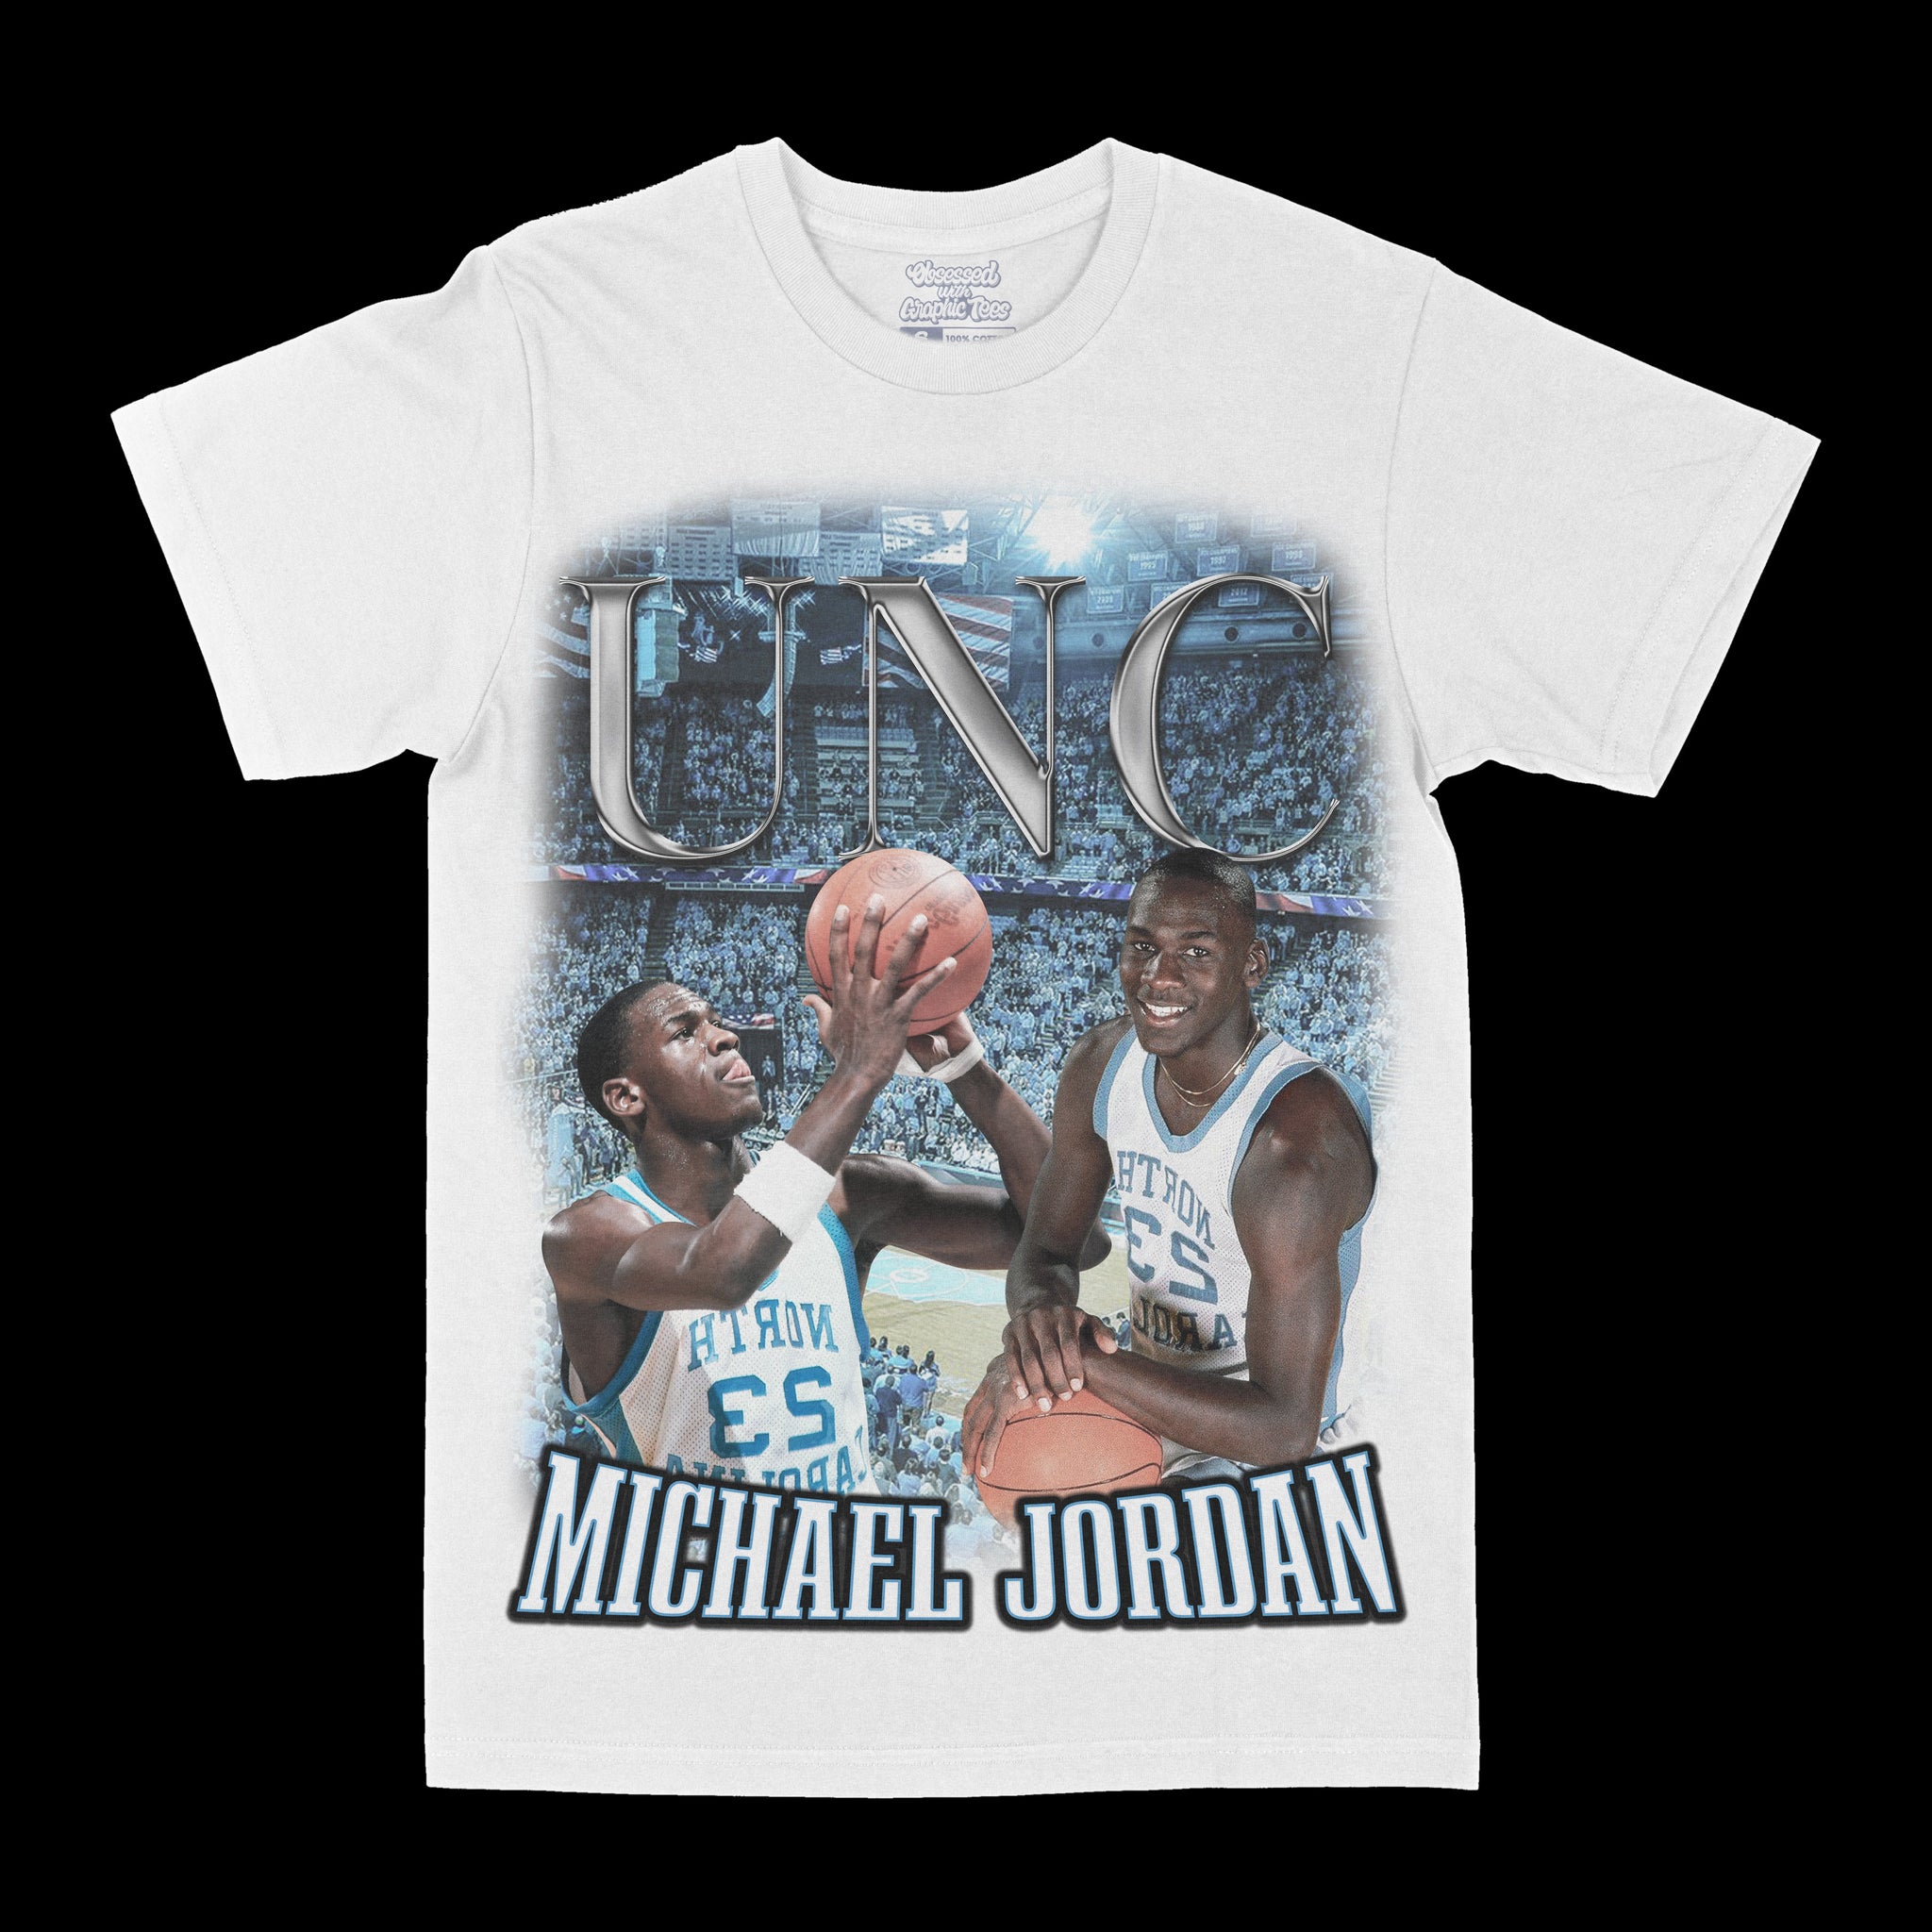 Michael Jordan "UNC" Graphic Tee